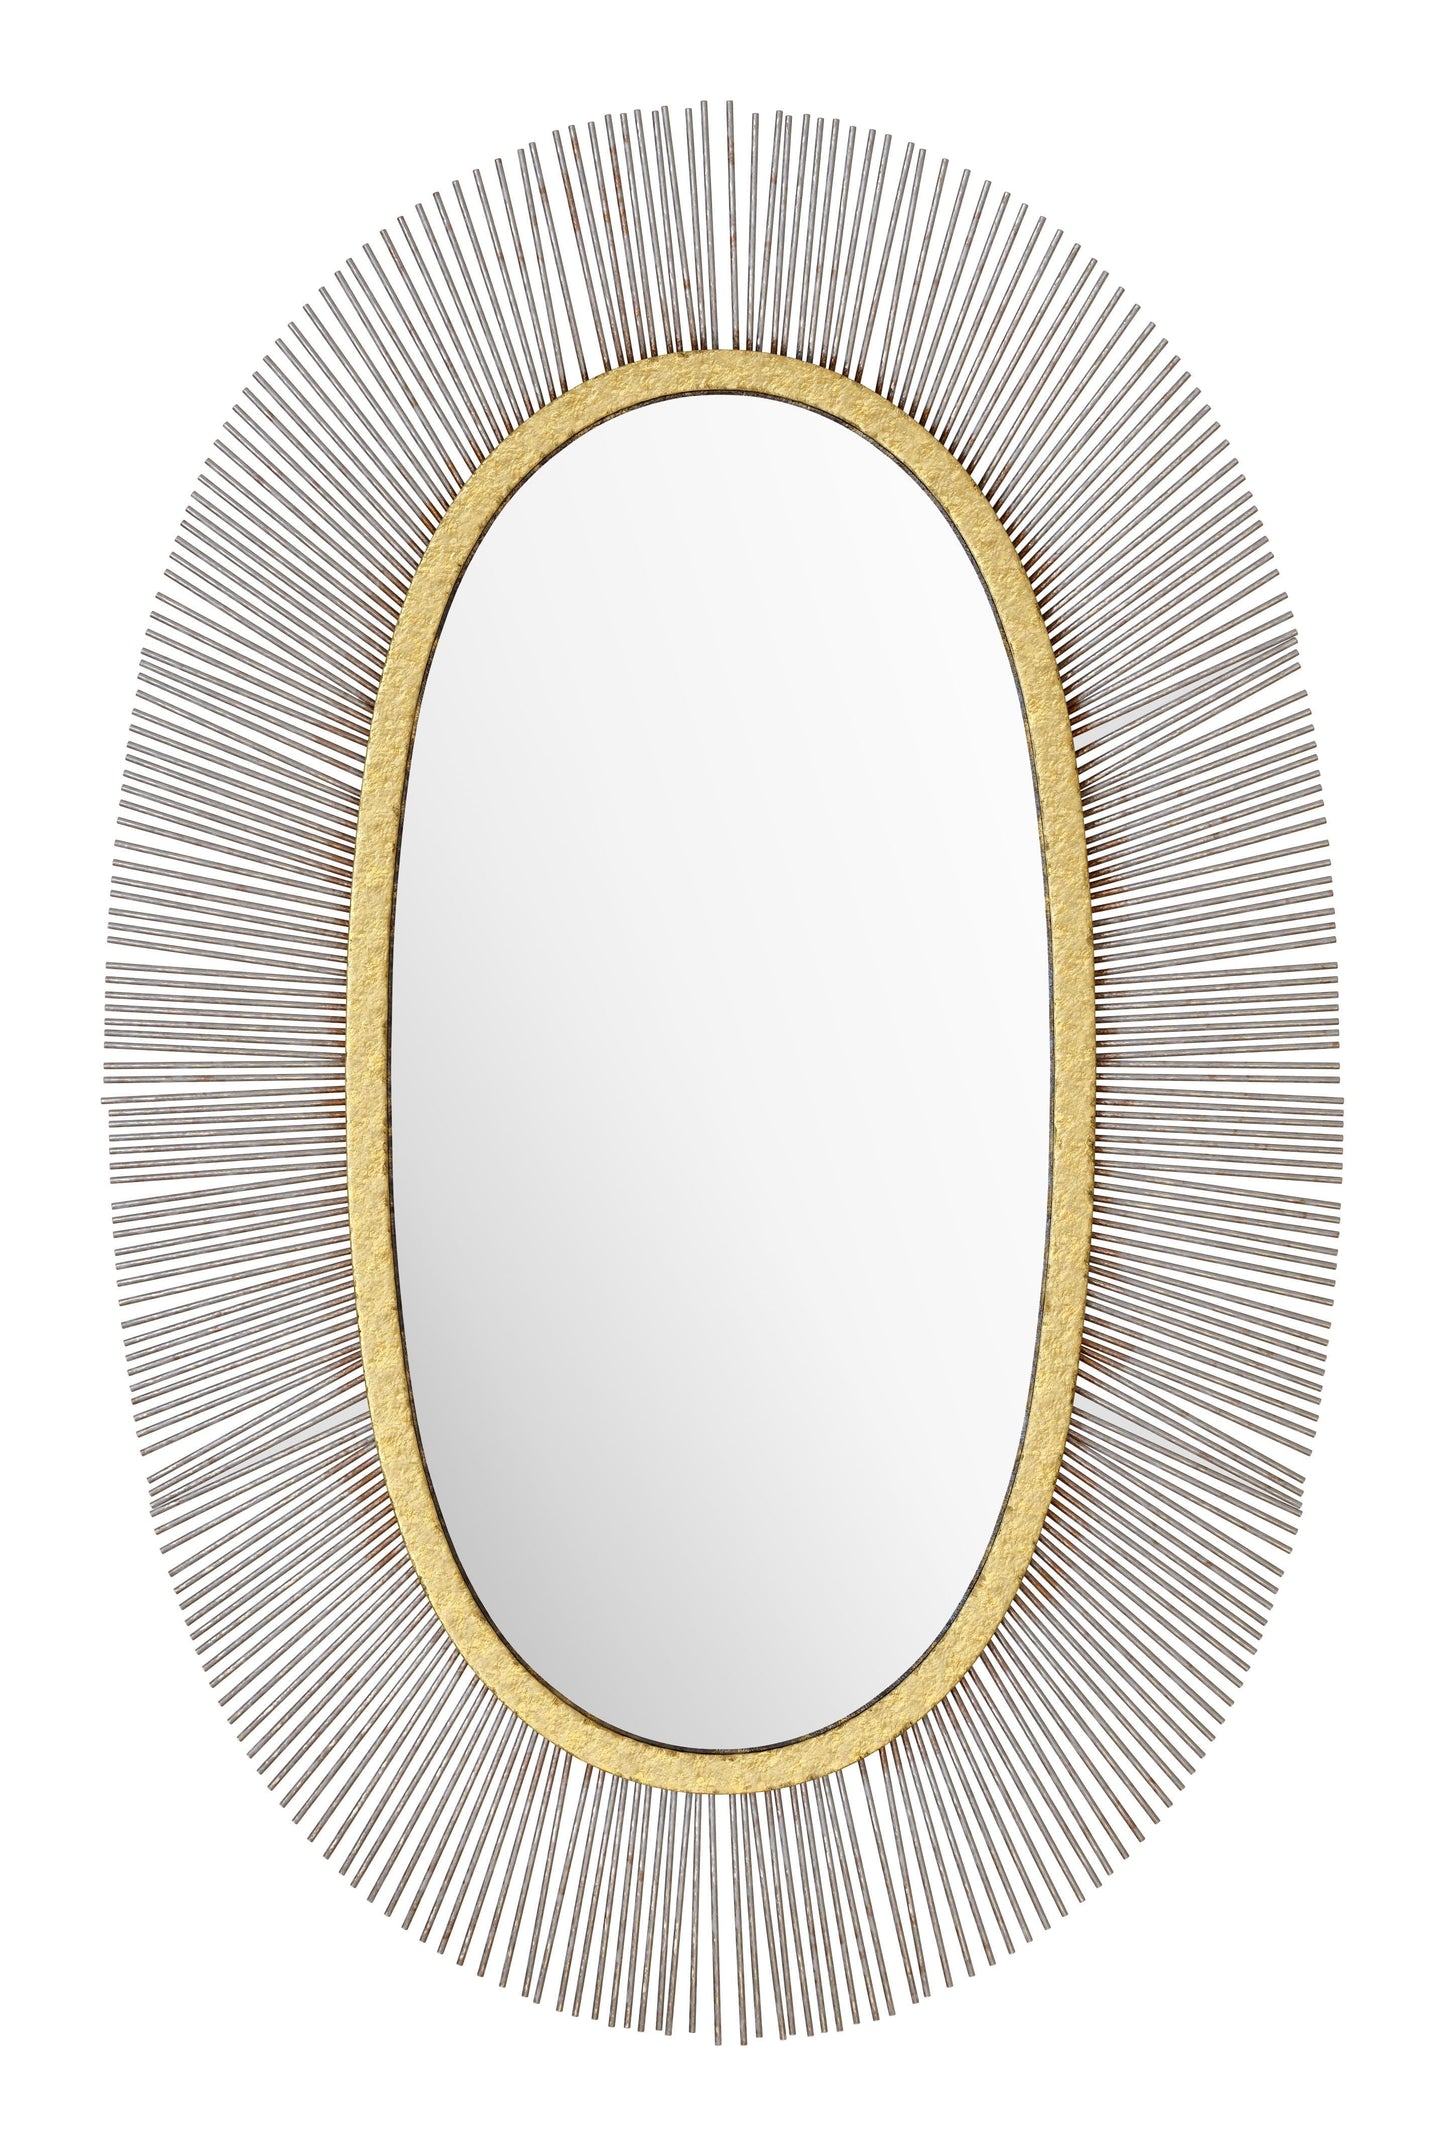 Zuo Juju Oval Mirror Black & Gold (A12215)